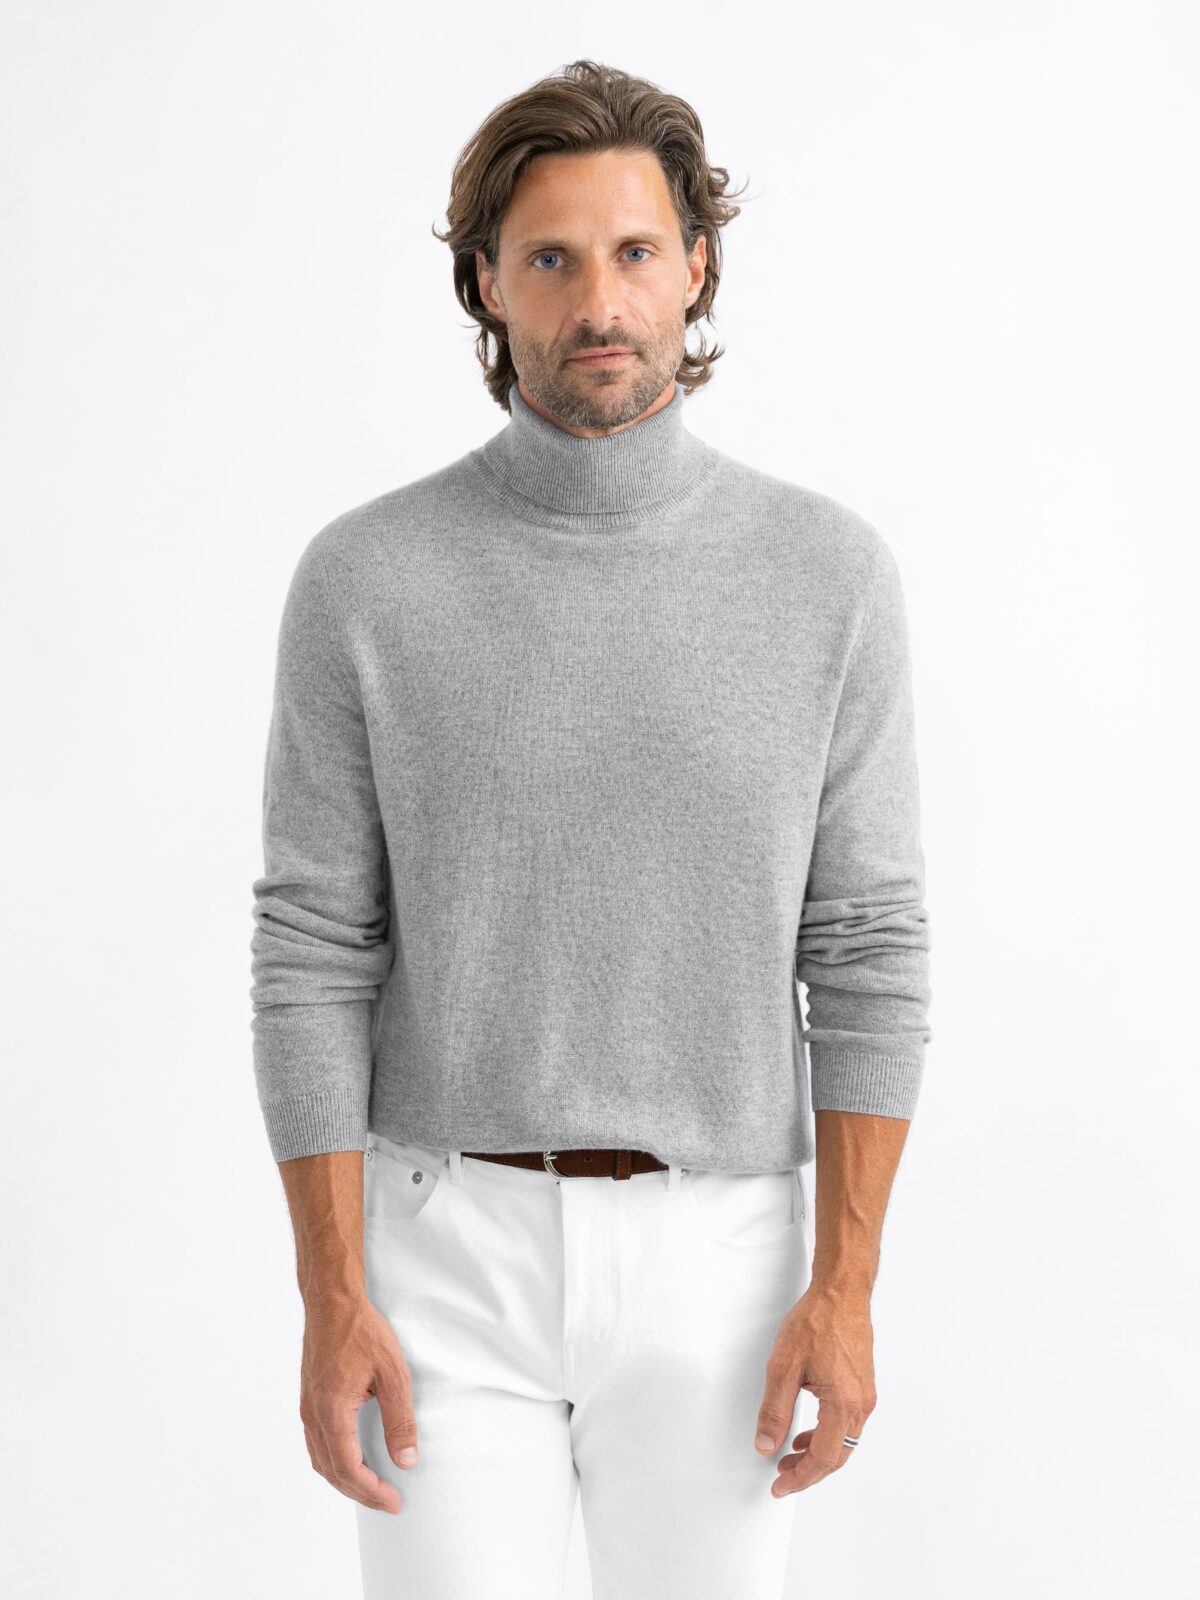 Light Grey Cashmere Turtleneck Sweater by Proper Cloth